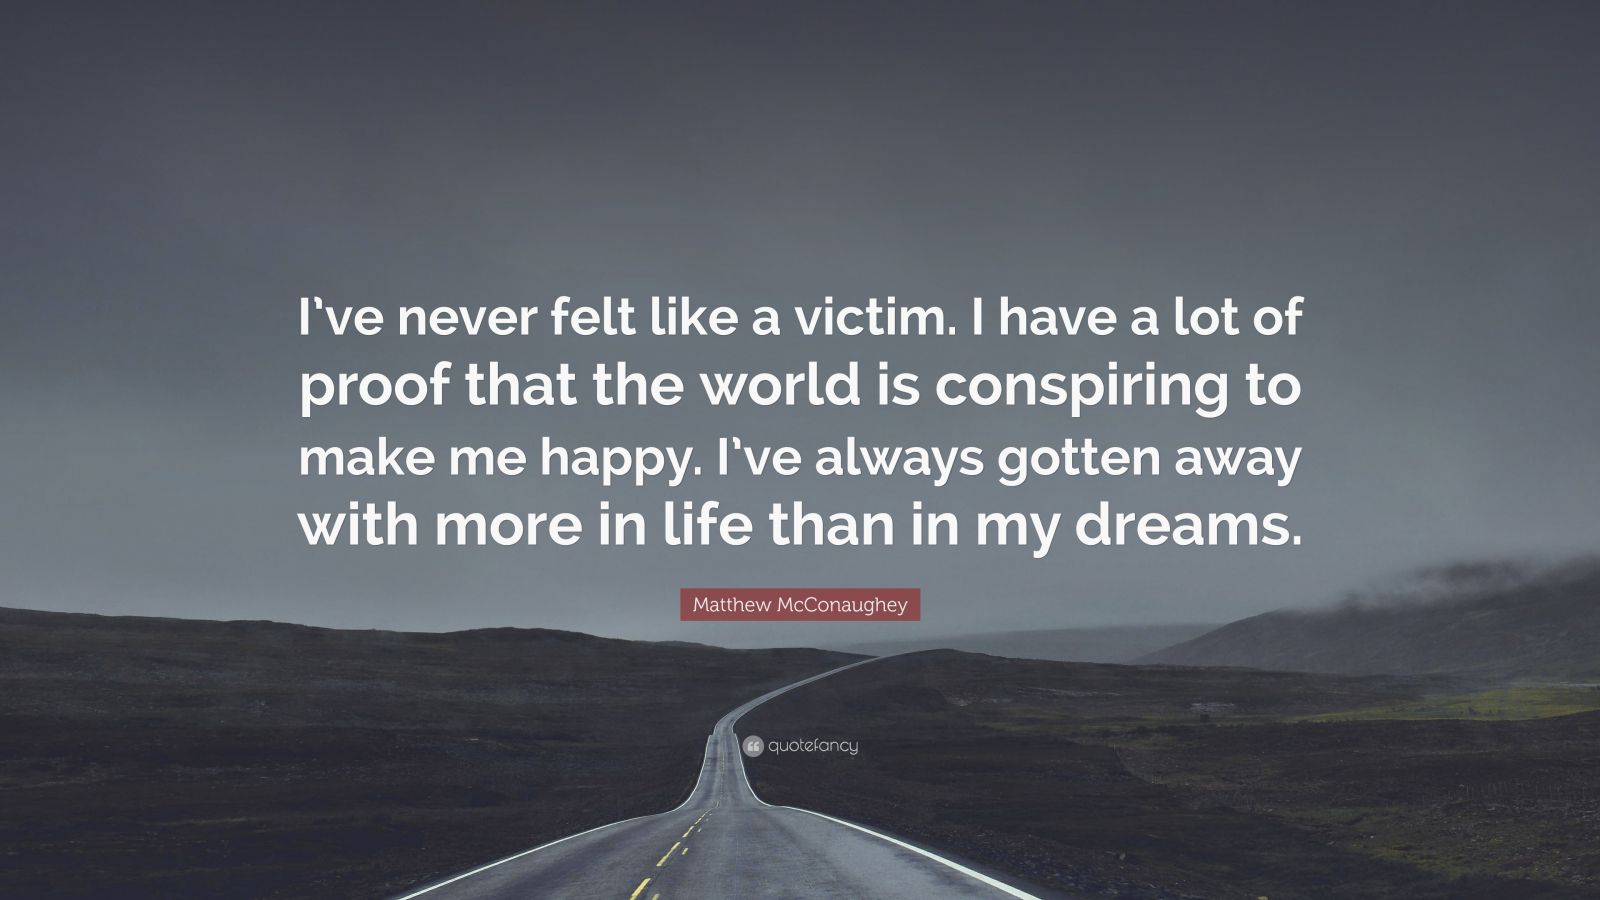 Matthew McConaughey Quote: “I’ve never felt like a victim. I have a lot ...